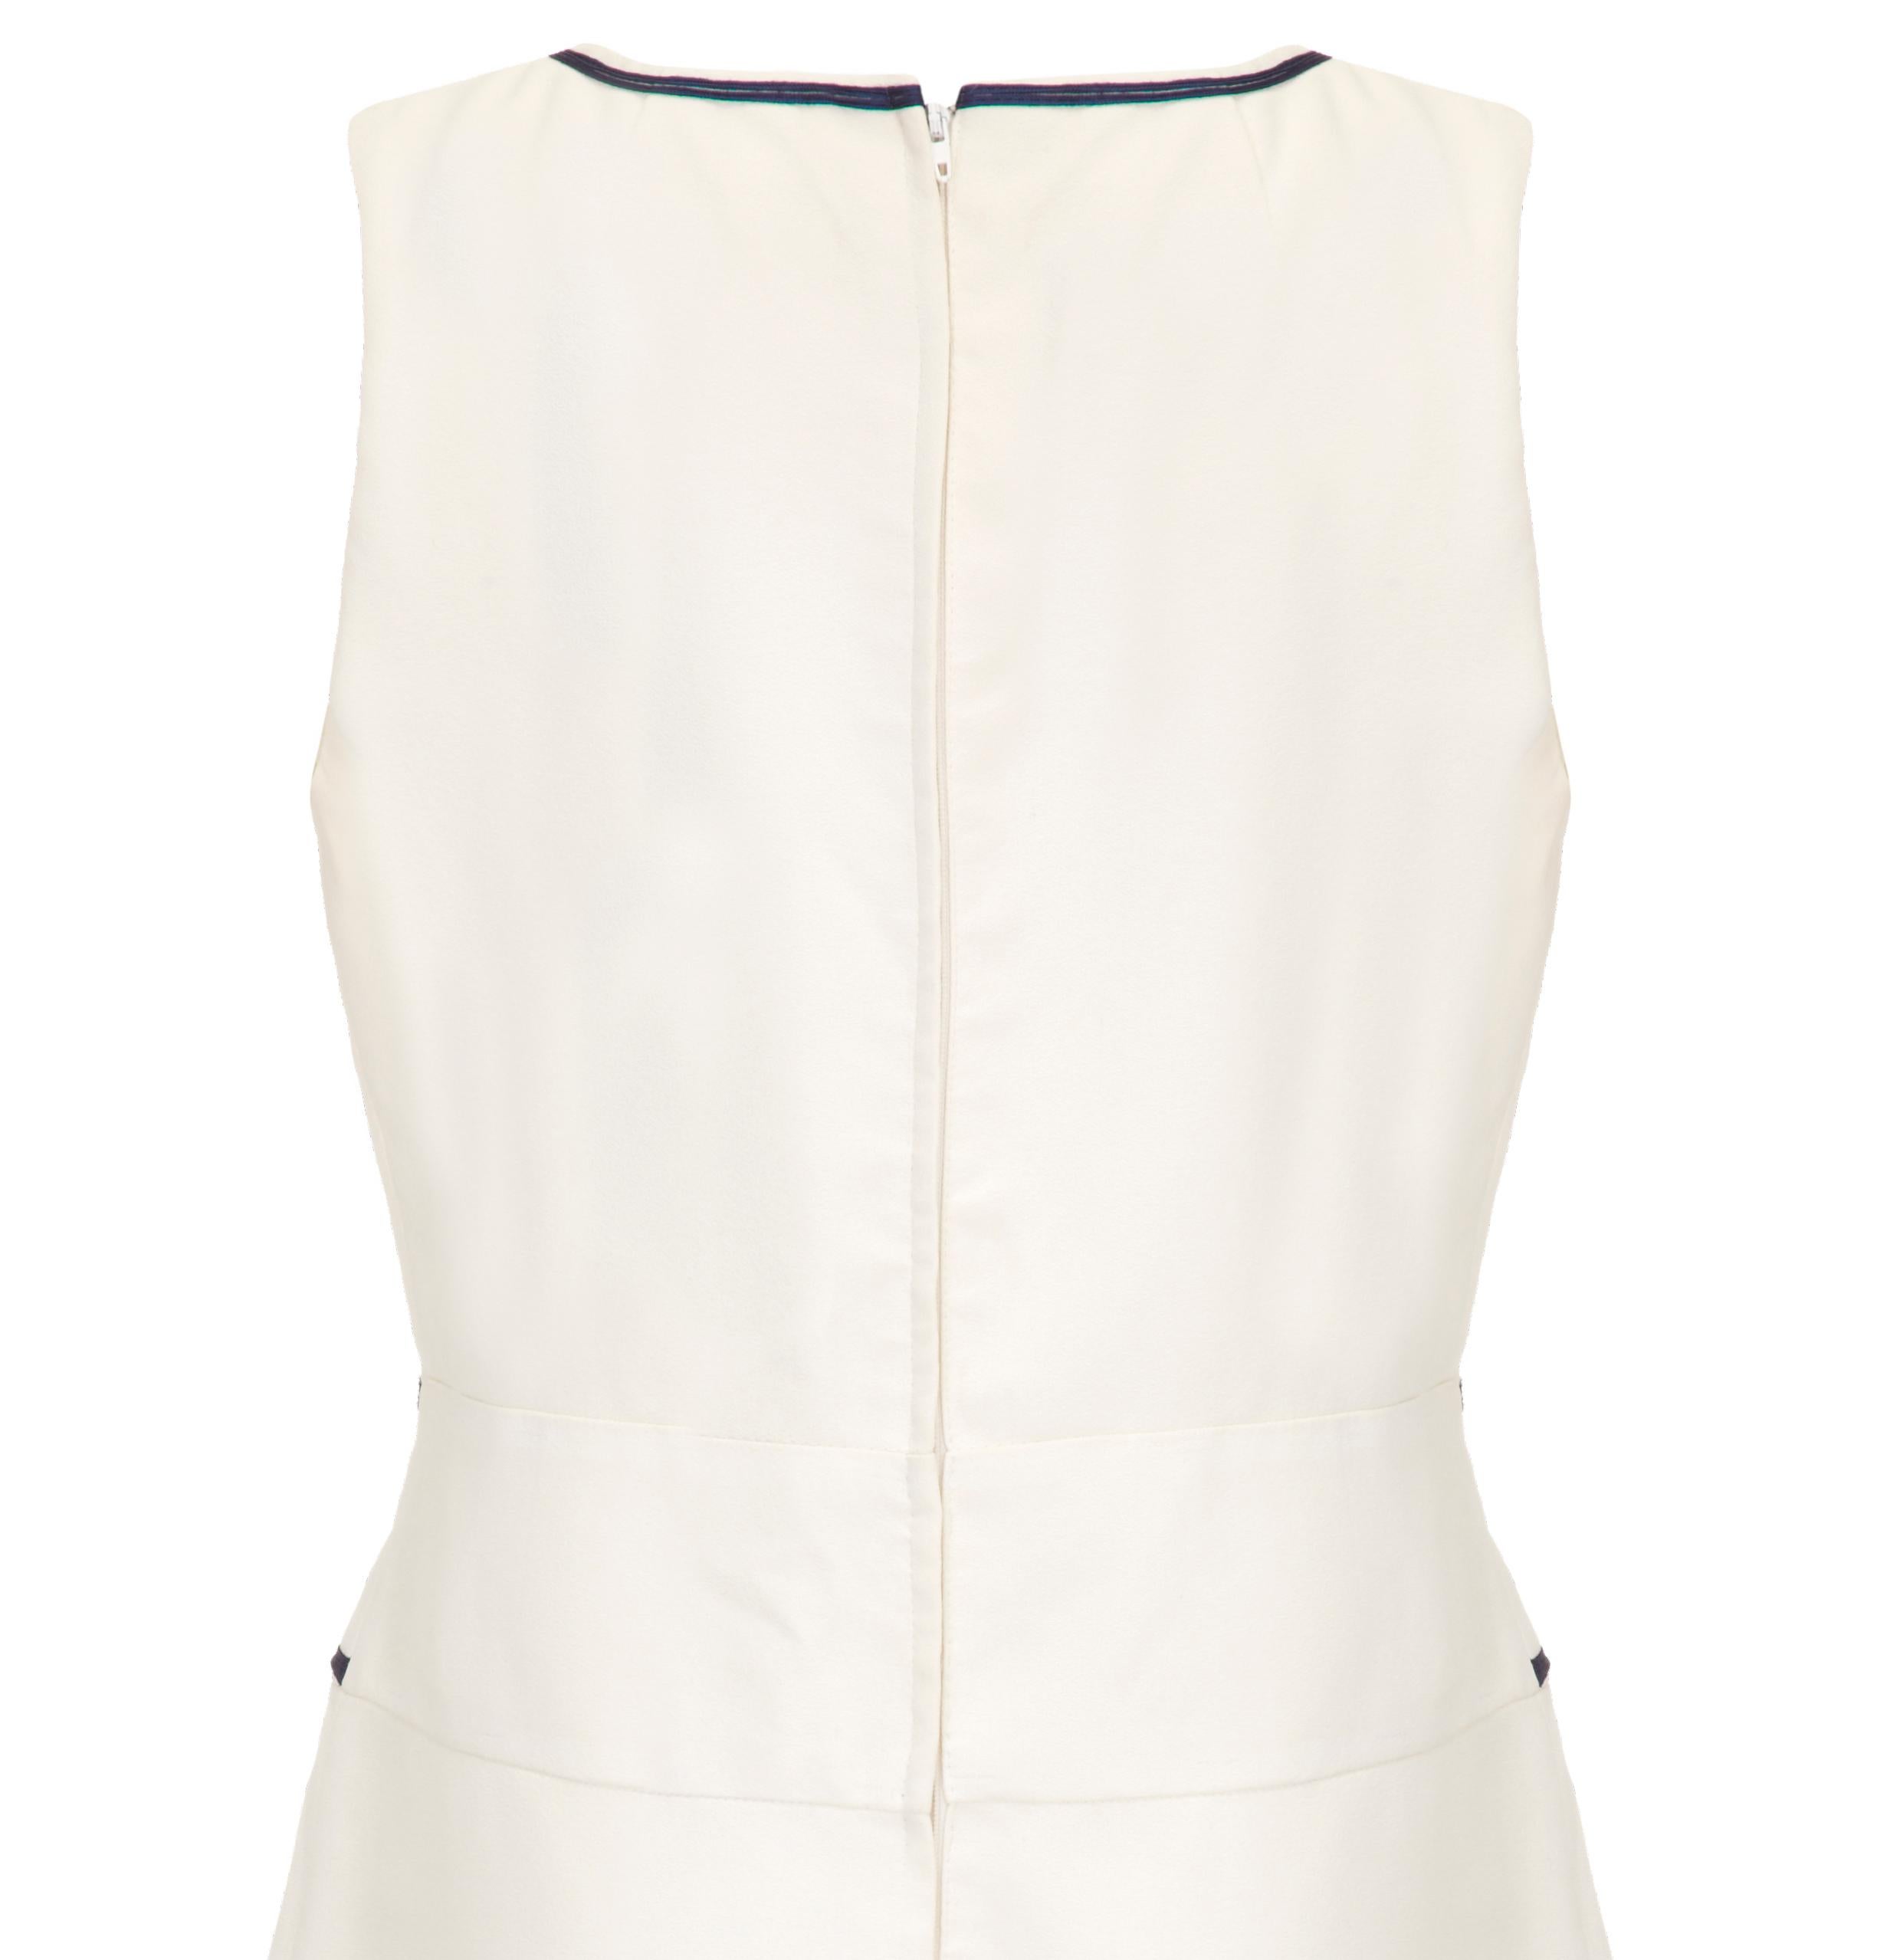 Women's 1960s Louis Feraud White Mini Dress With Navy Appliqué For Sale